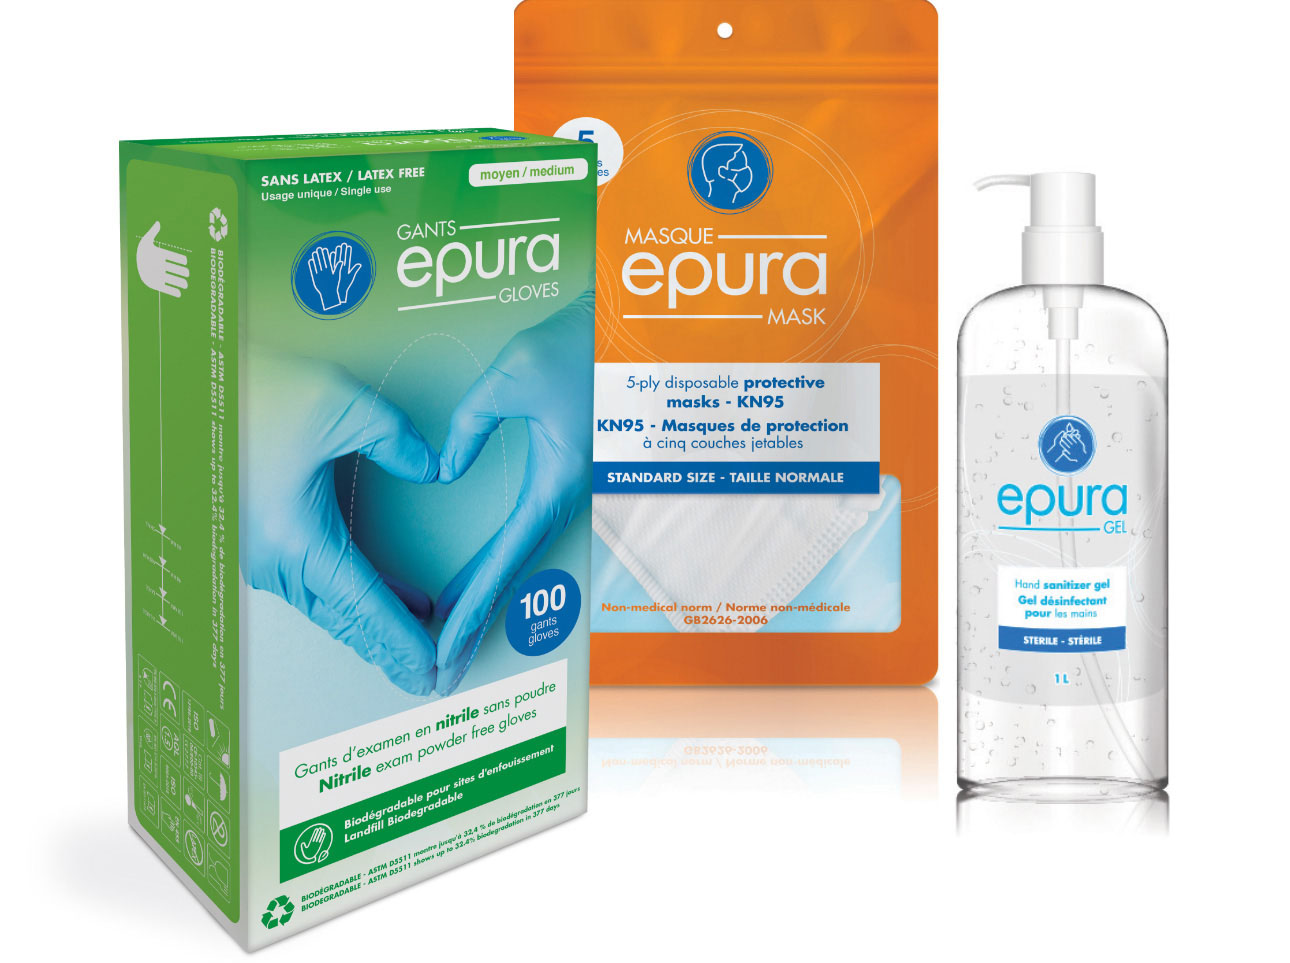 Epura products